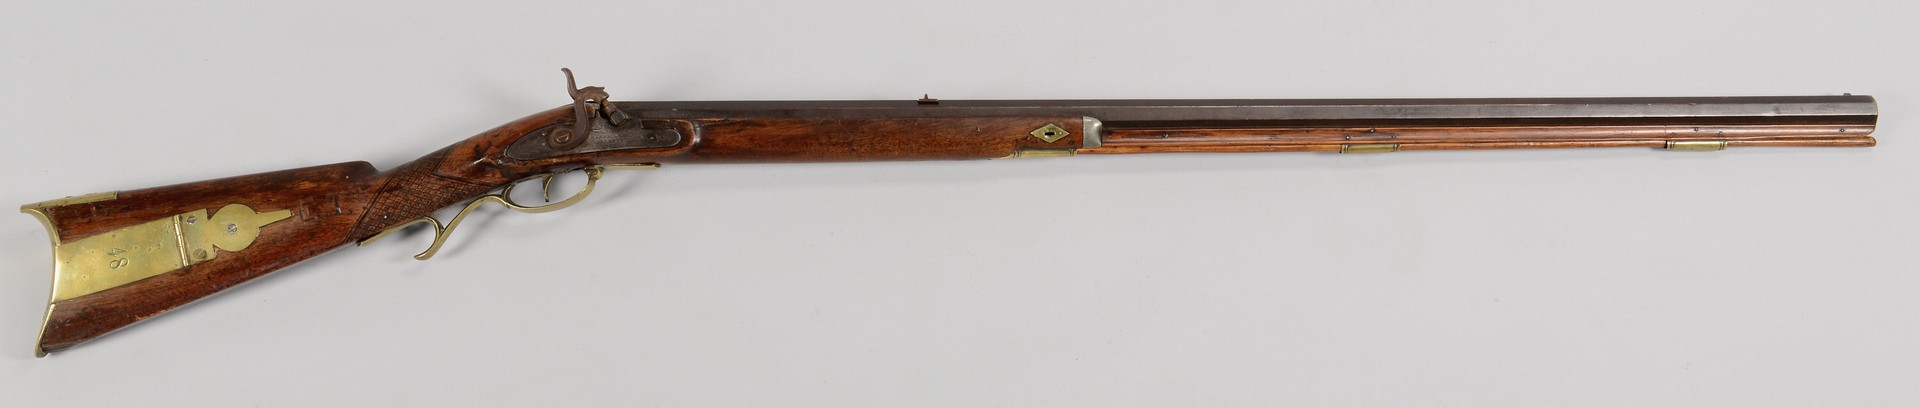 Lot 524: H. Pratt Percussion Long Rifle